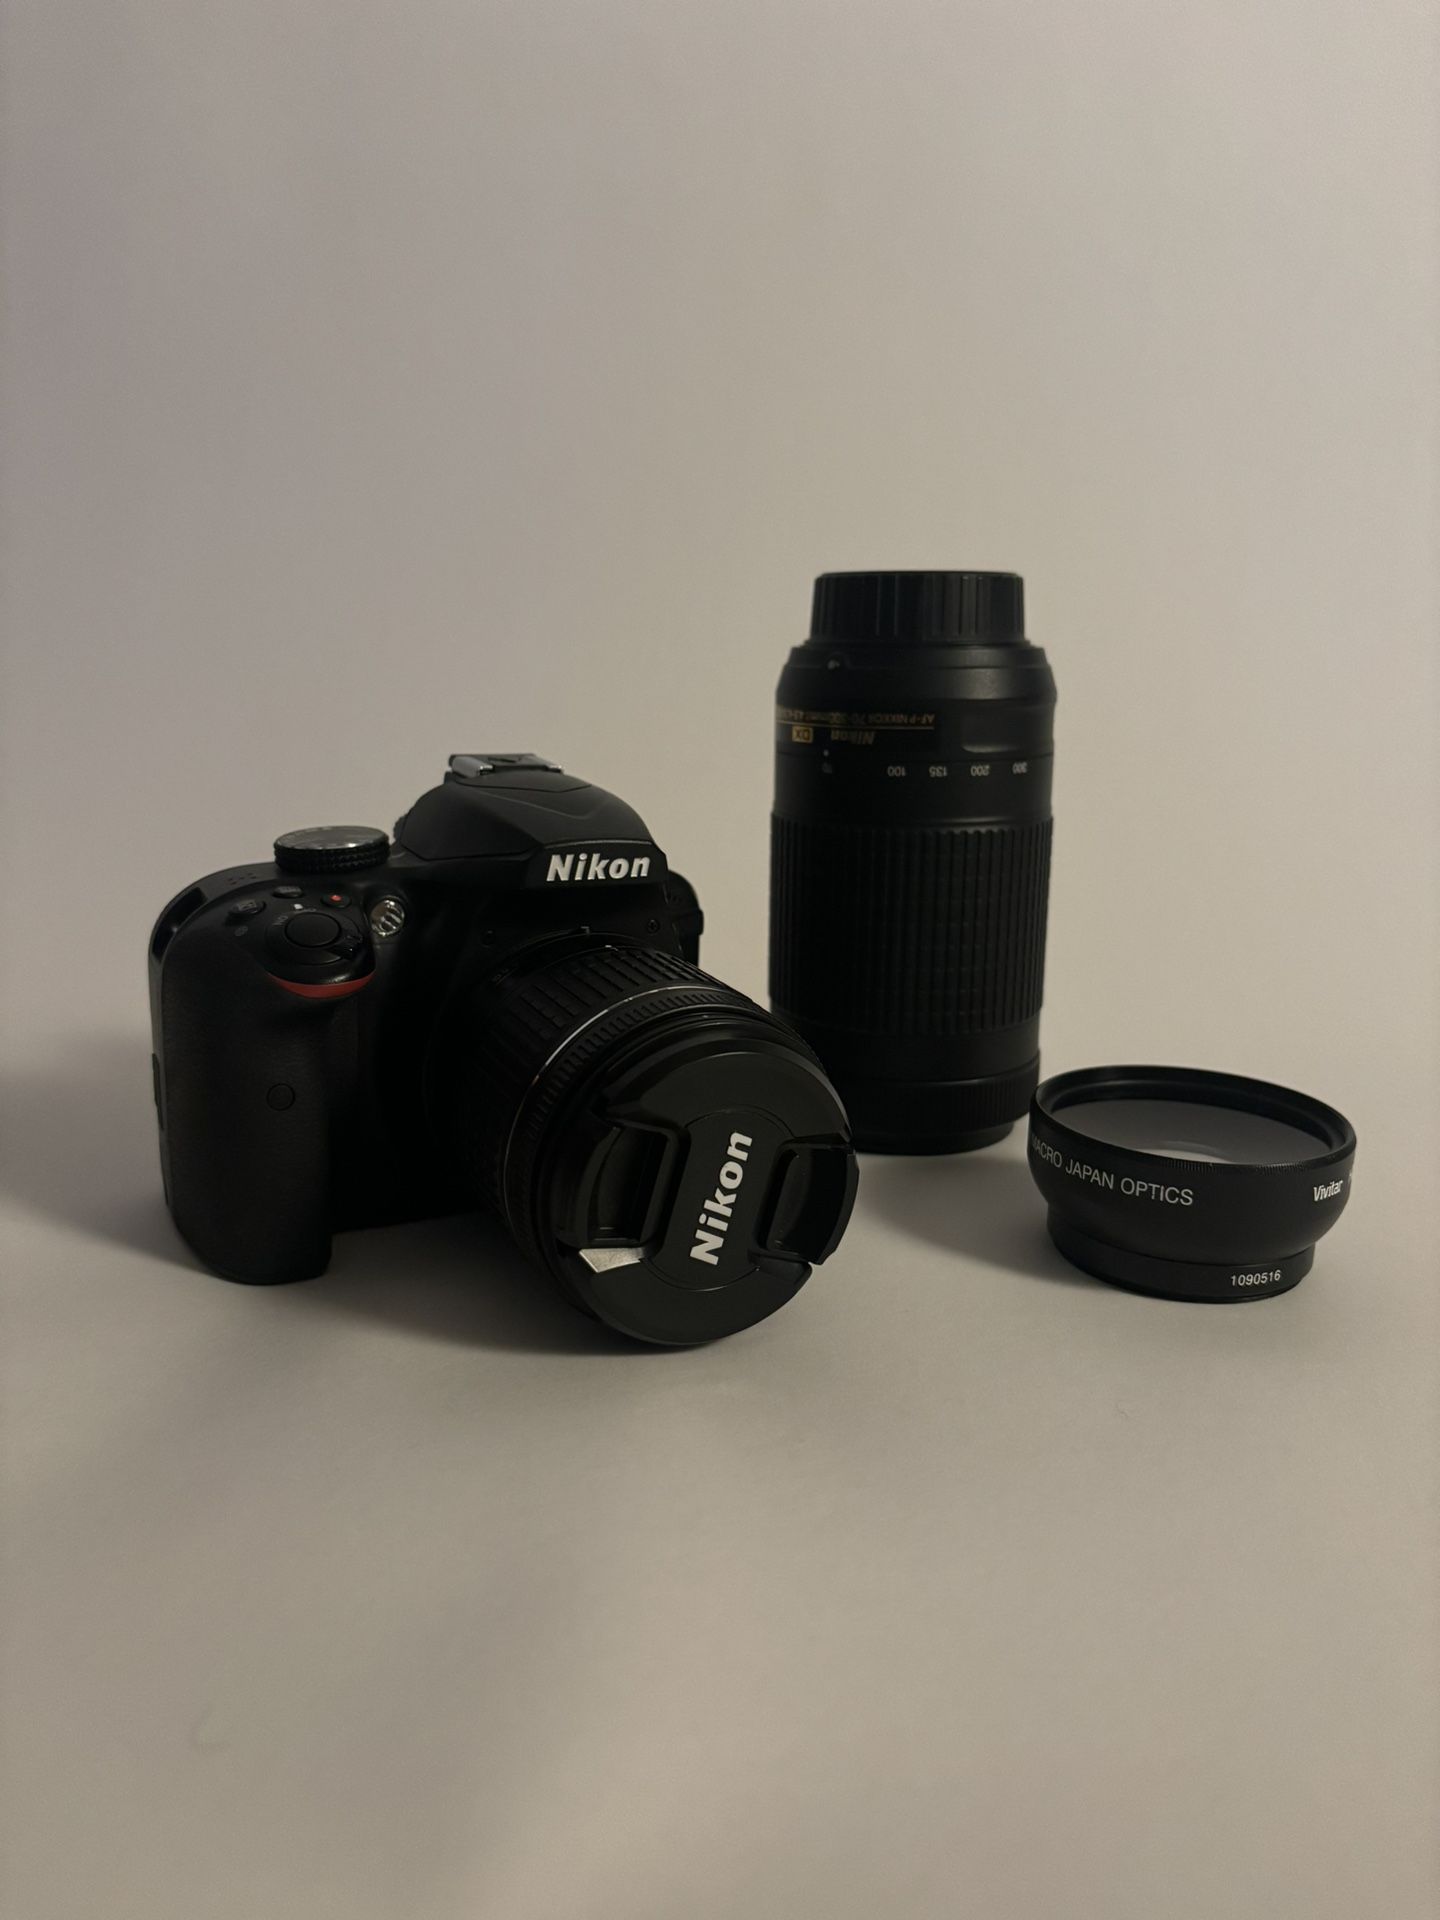 Nikon D3400 w/ 2 lenses - $600